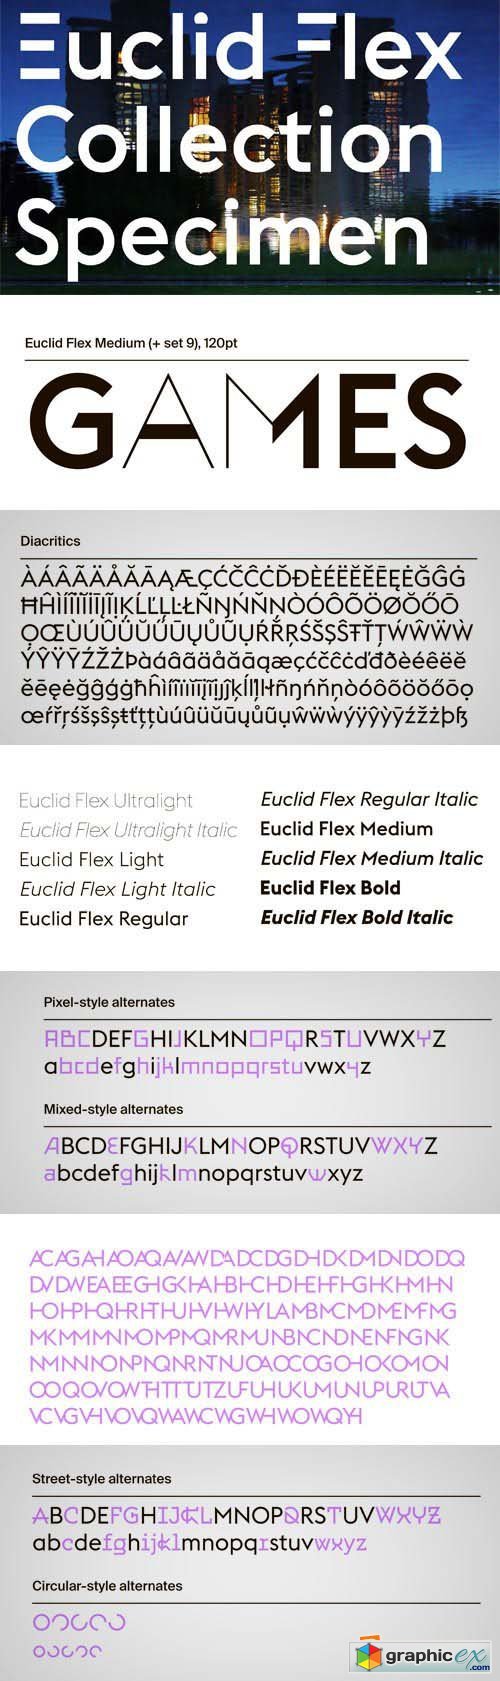 Euclid Flex Font Family - 10 Fonts for �375